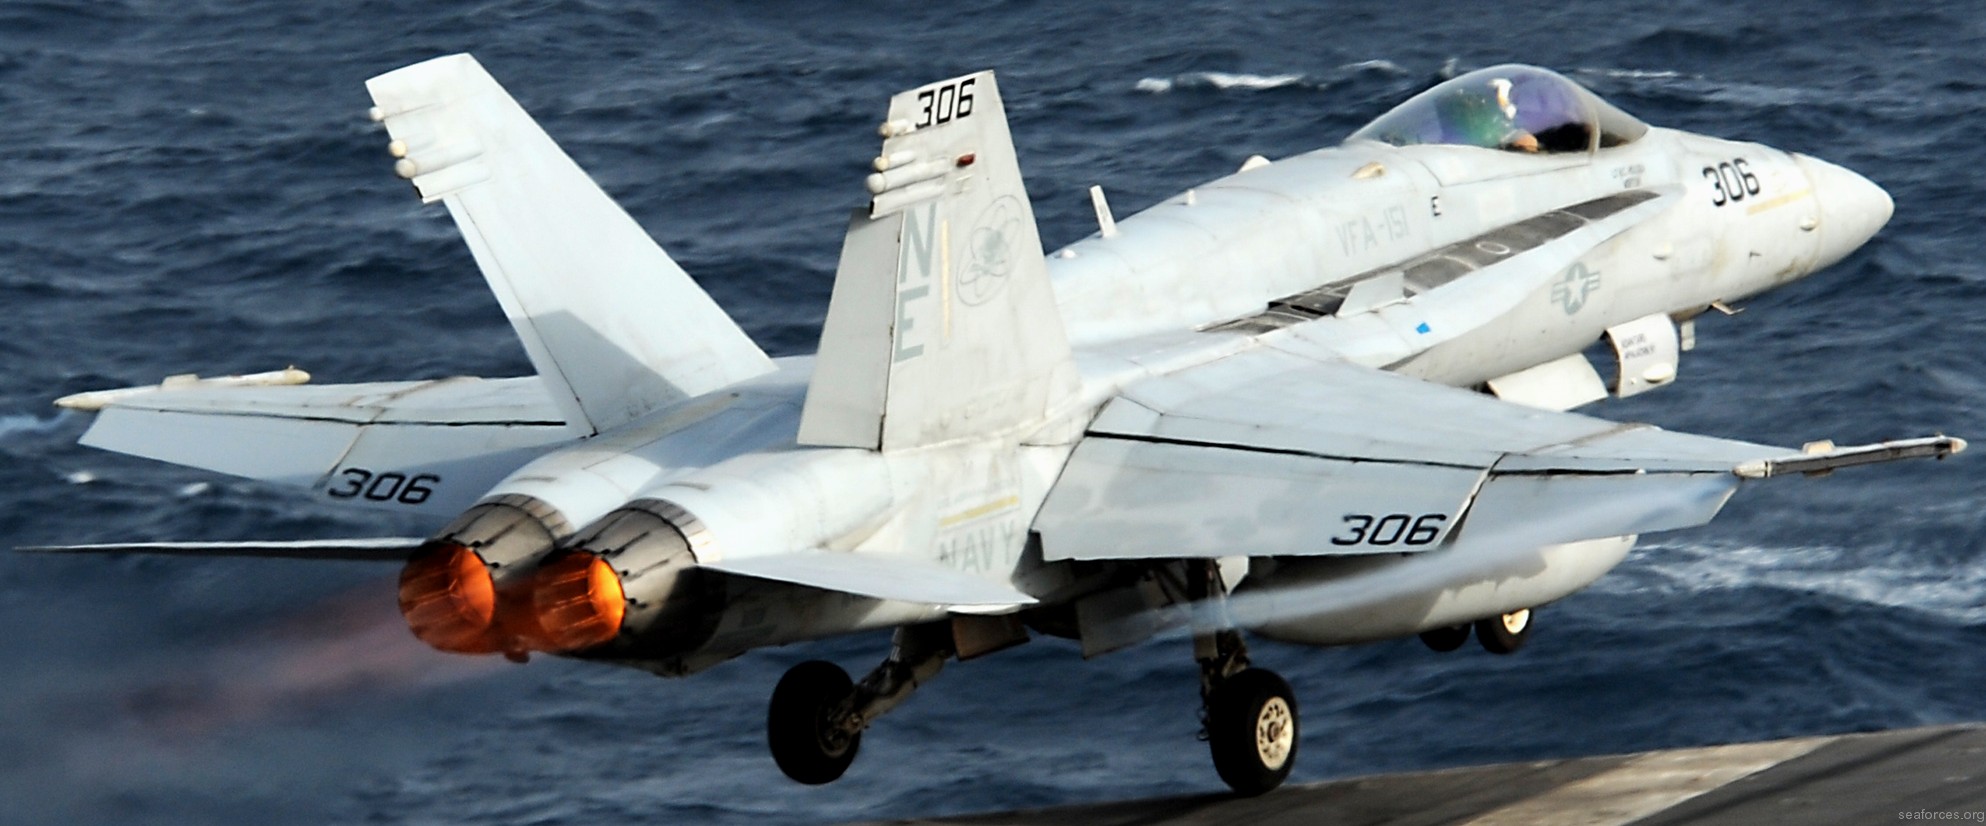 vfa-151 vigilantes strike fighter squadron navy f/a-18c hornet carrier air wing cvw-2 uss abraham lincoln cvn-72 19